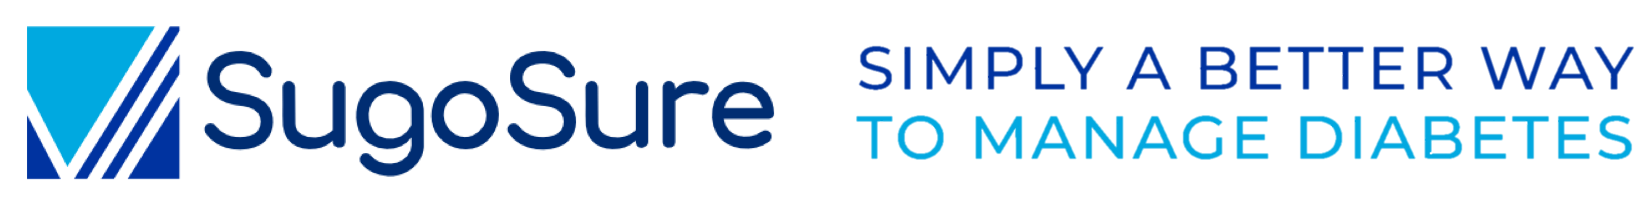 SS logo with tag horizontal